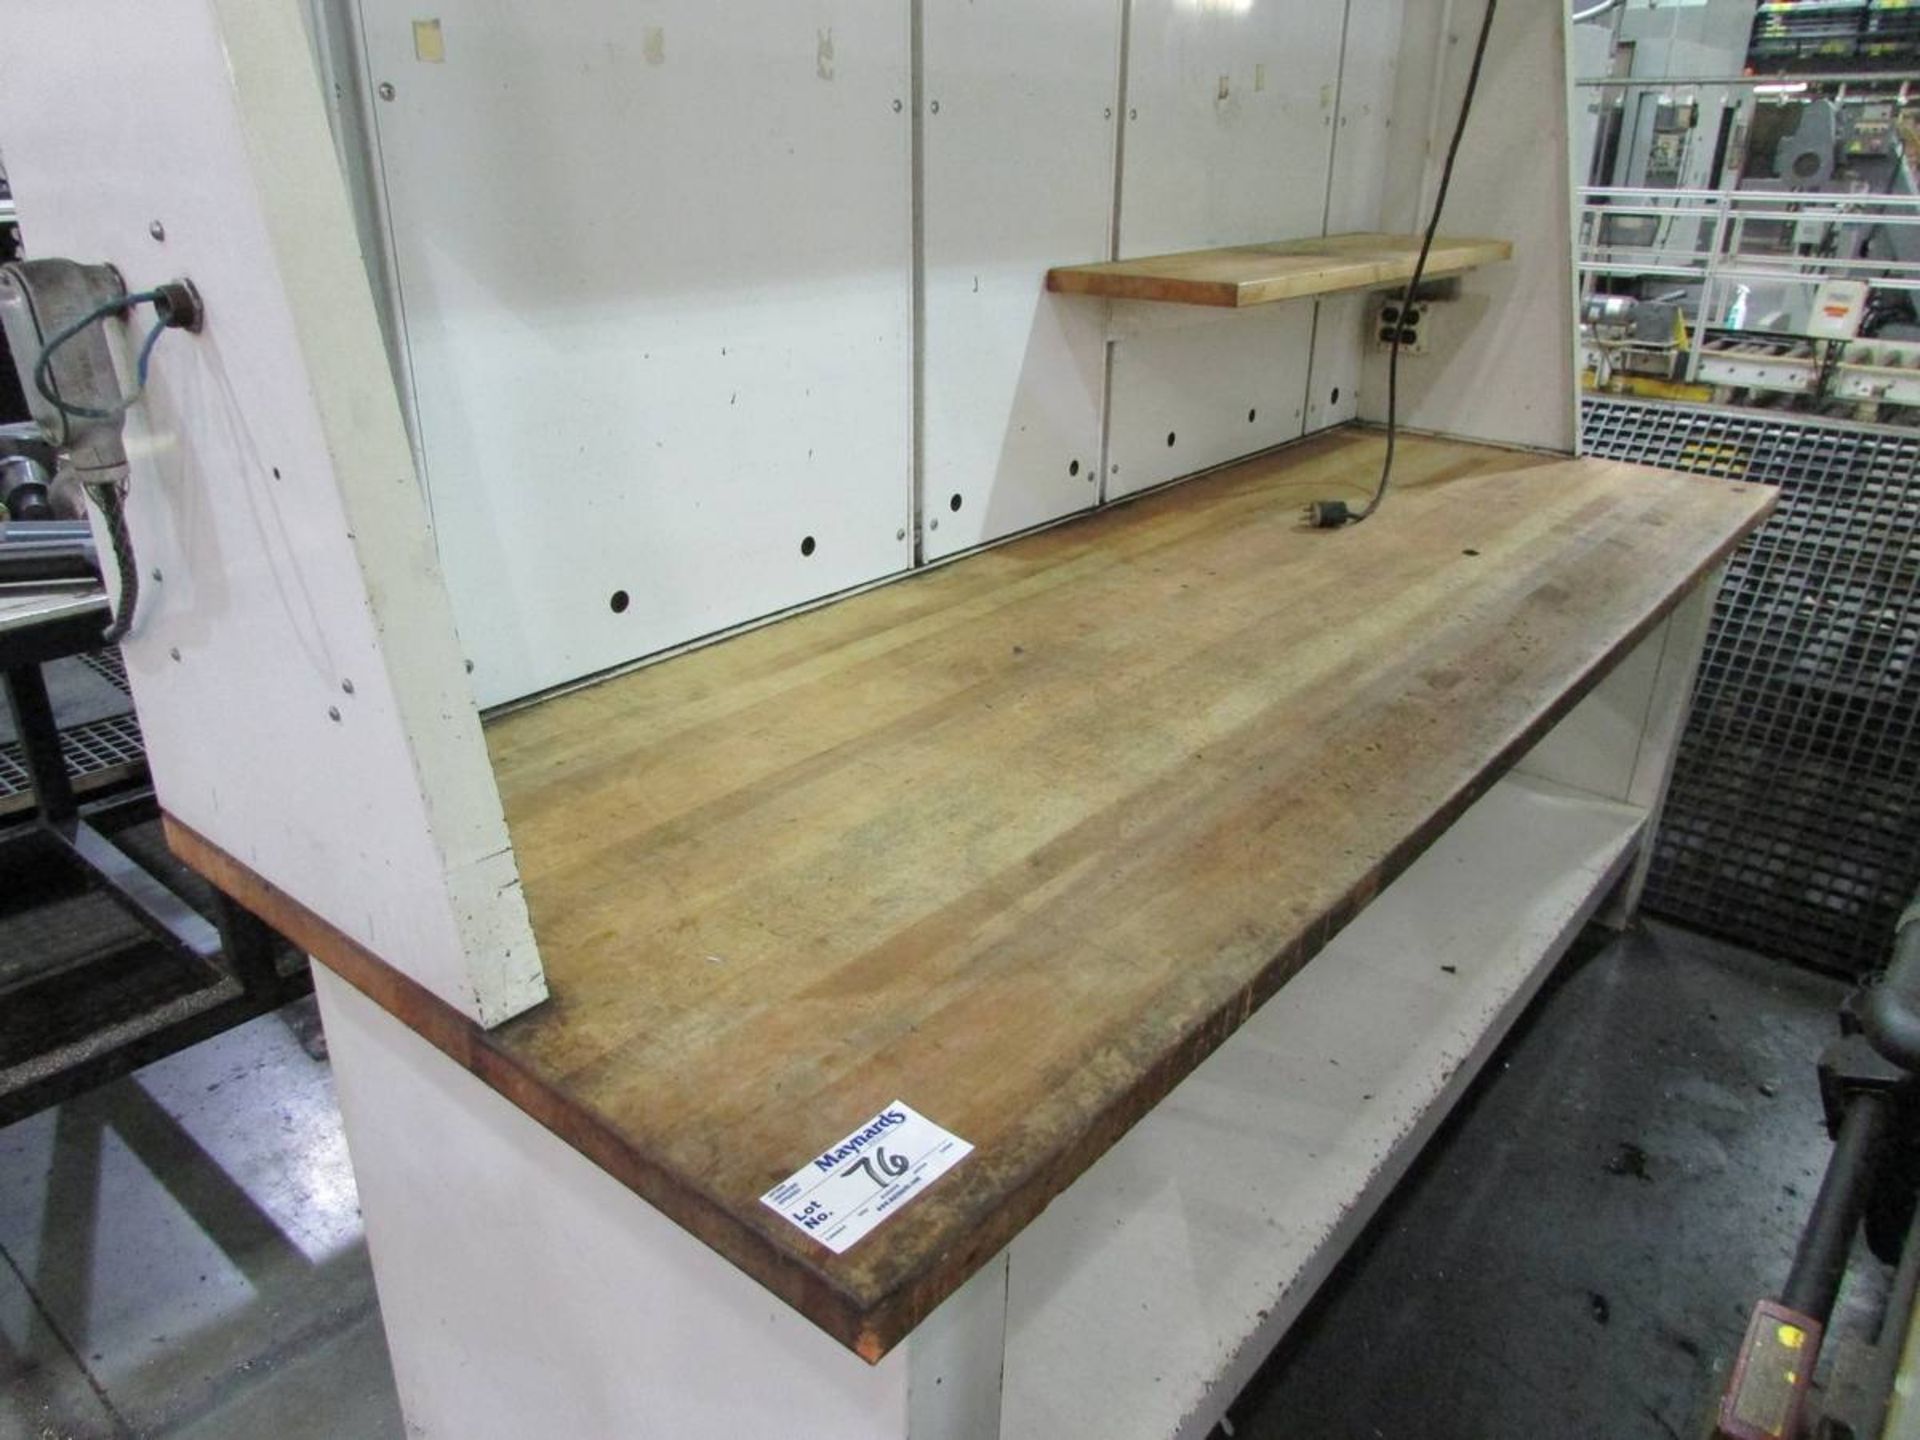 96"x34" Butcher Block Wood Top Inspection Work Bench - Image 2 of 4